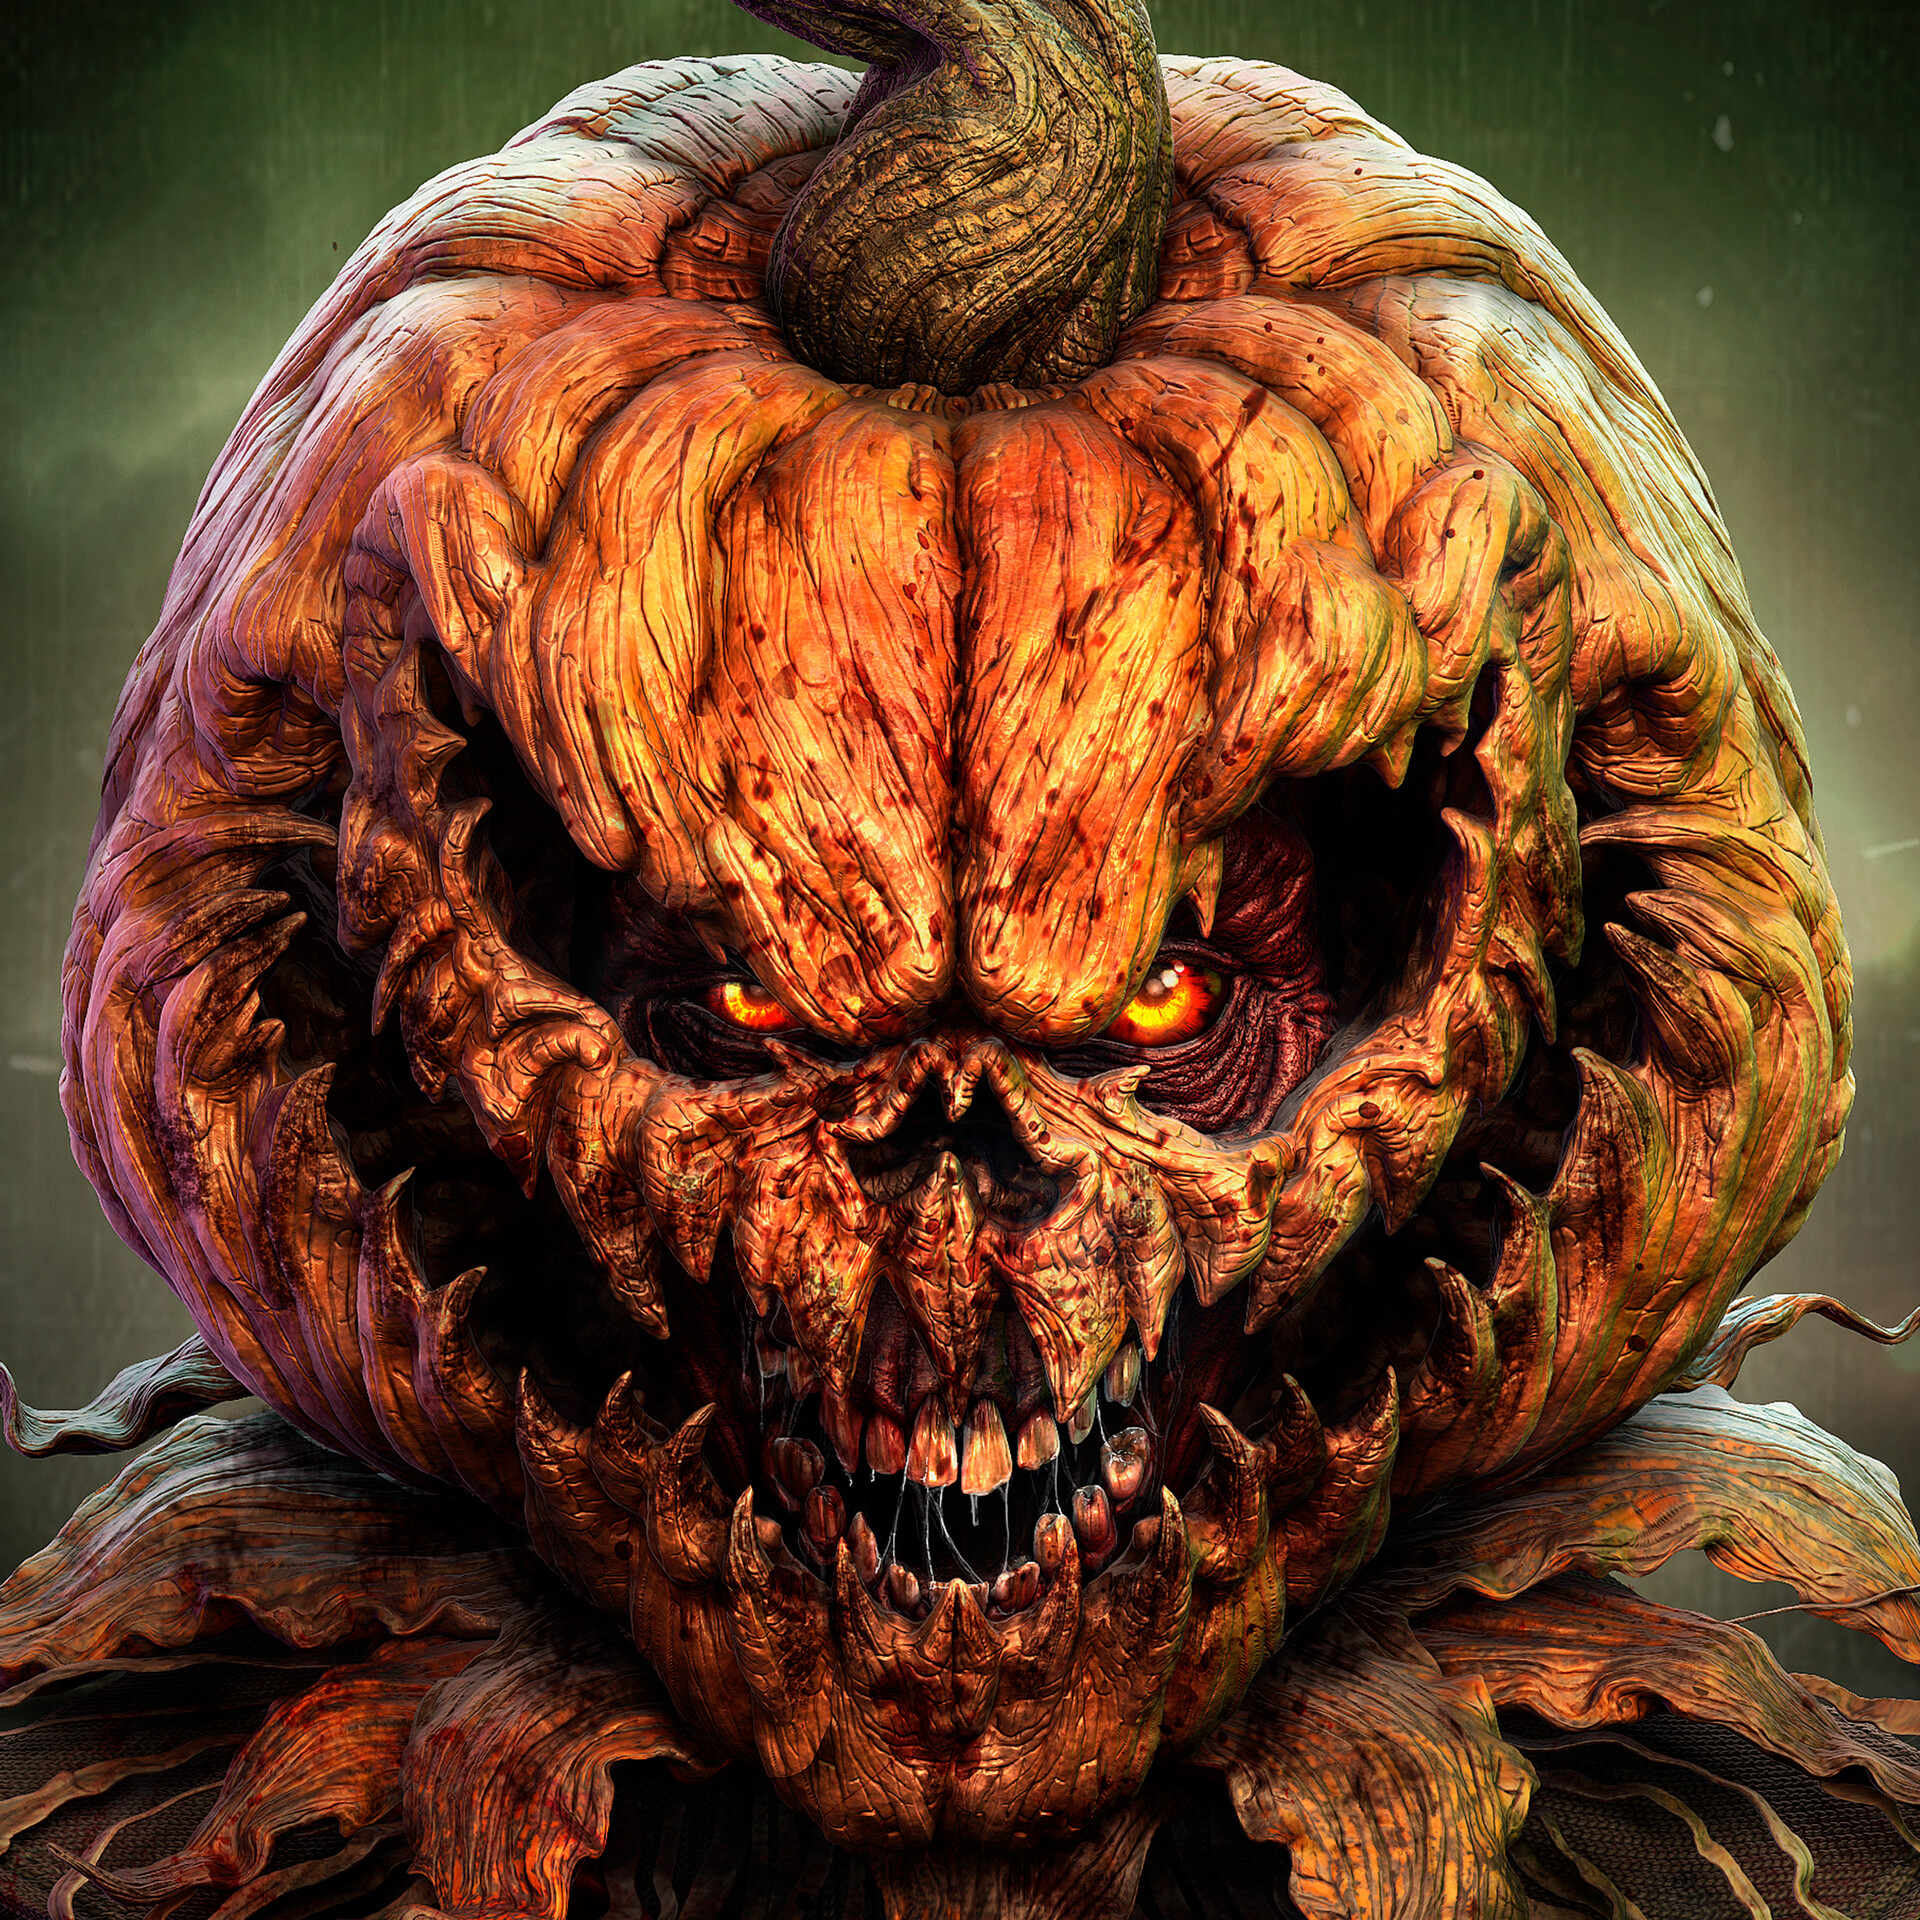 PumpkinHead - Halloween, Daniel "Daniboy" Sanches.